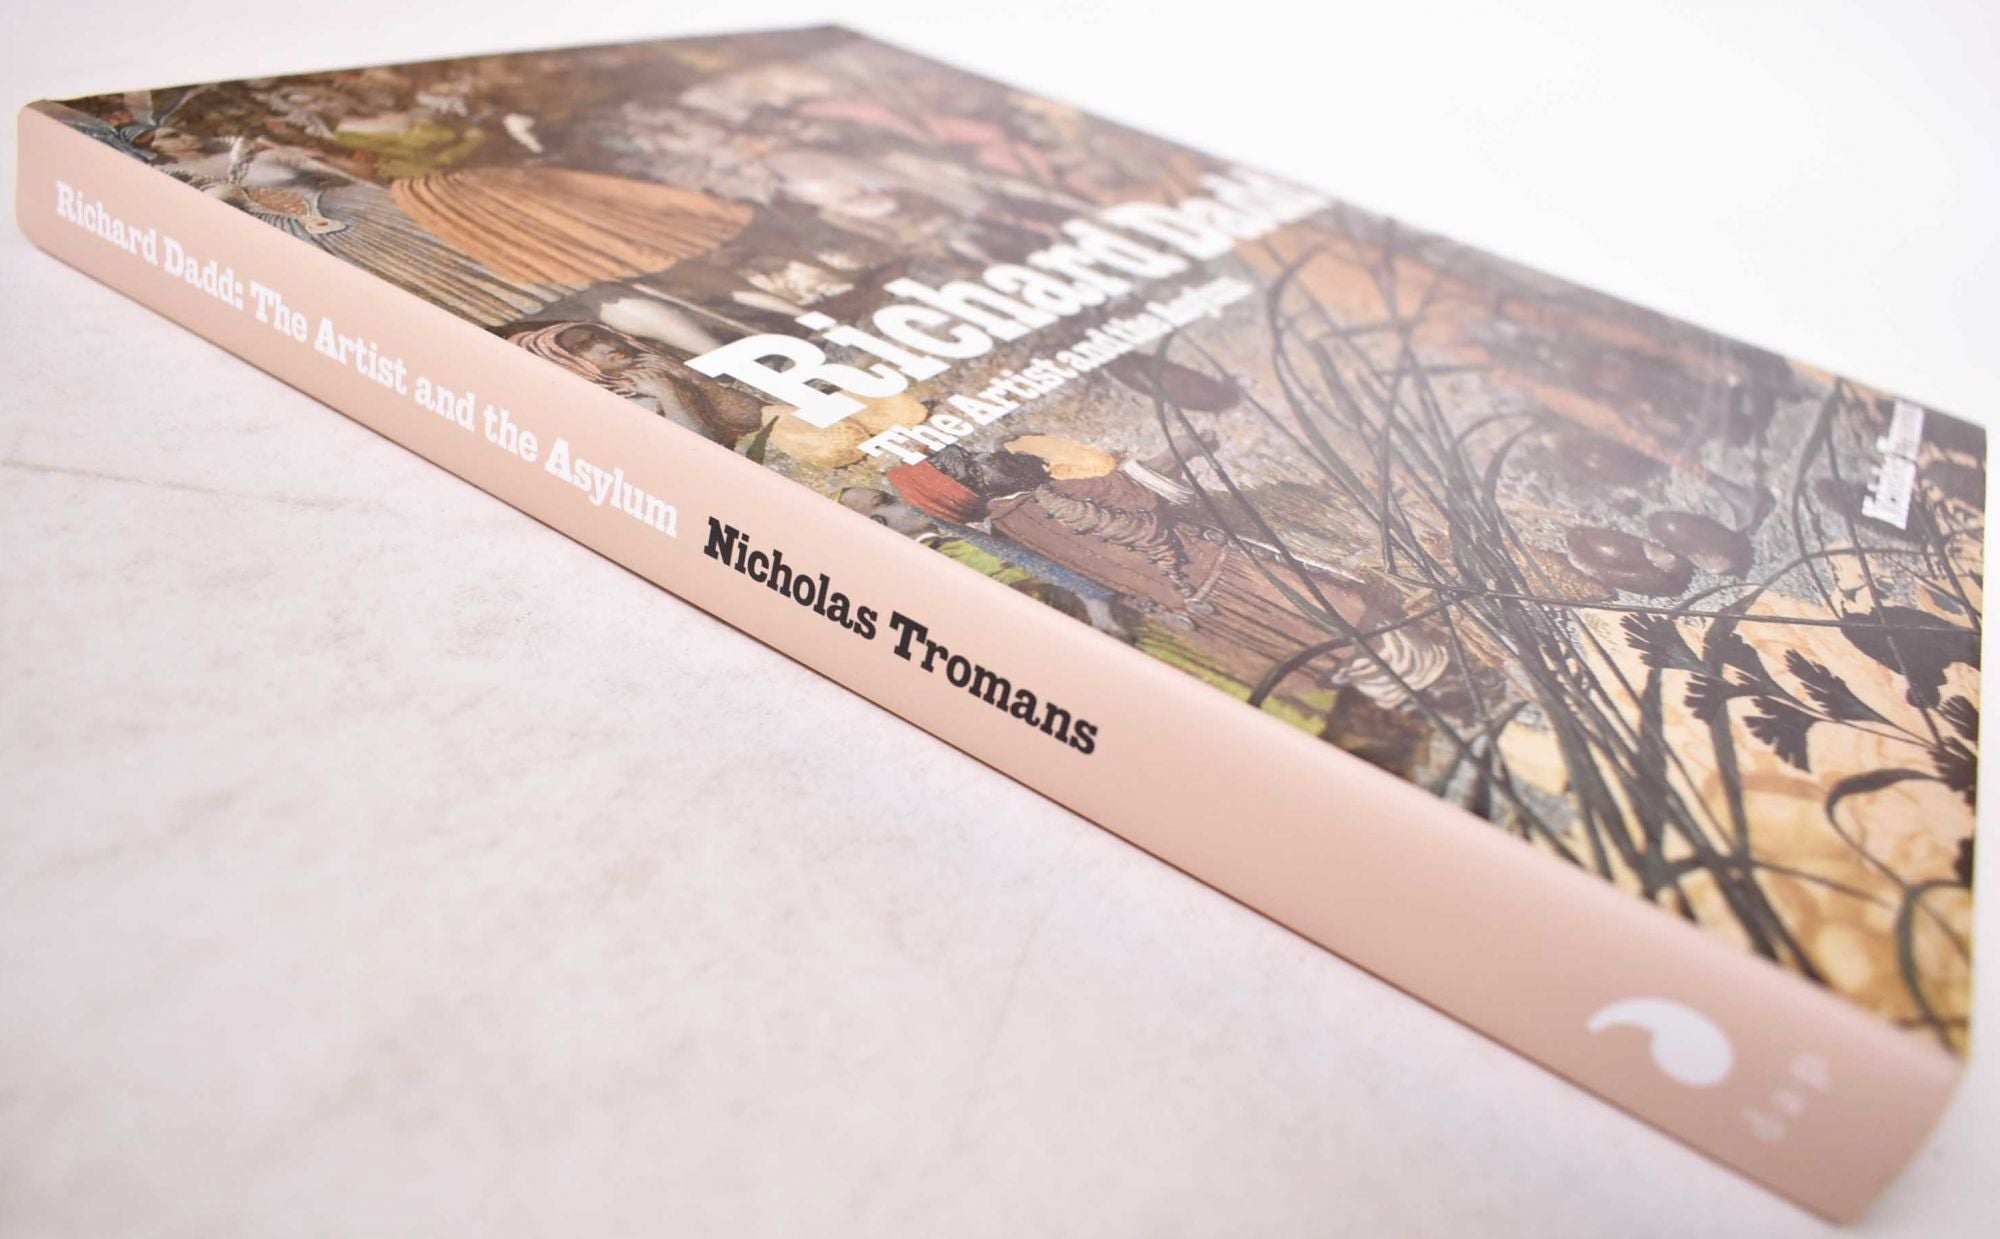 Richard Dadd: The Artist and the Asylum | Nicholas Tromans